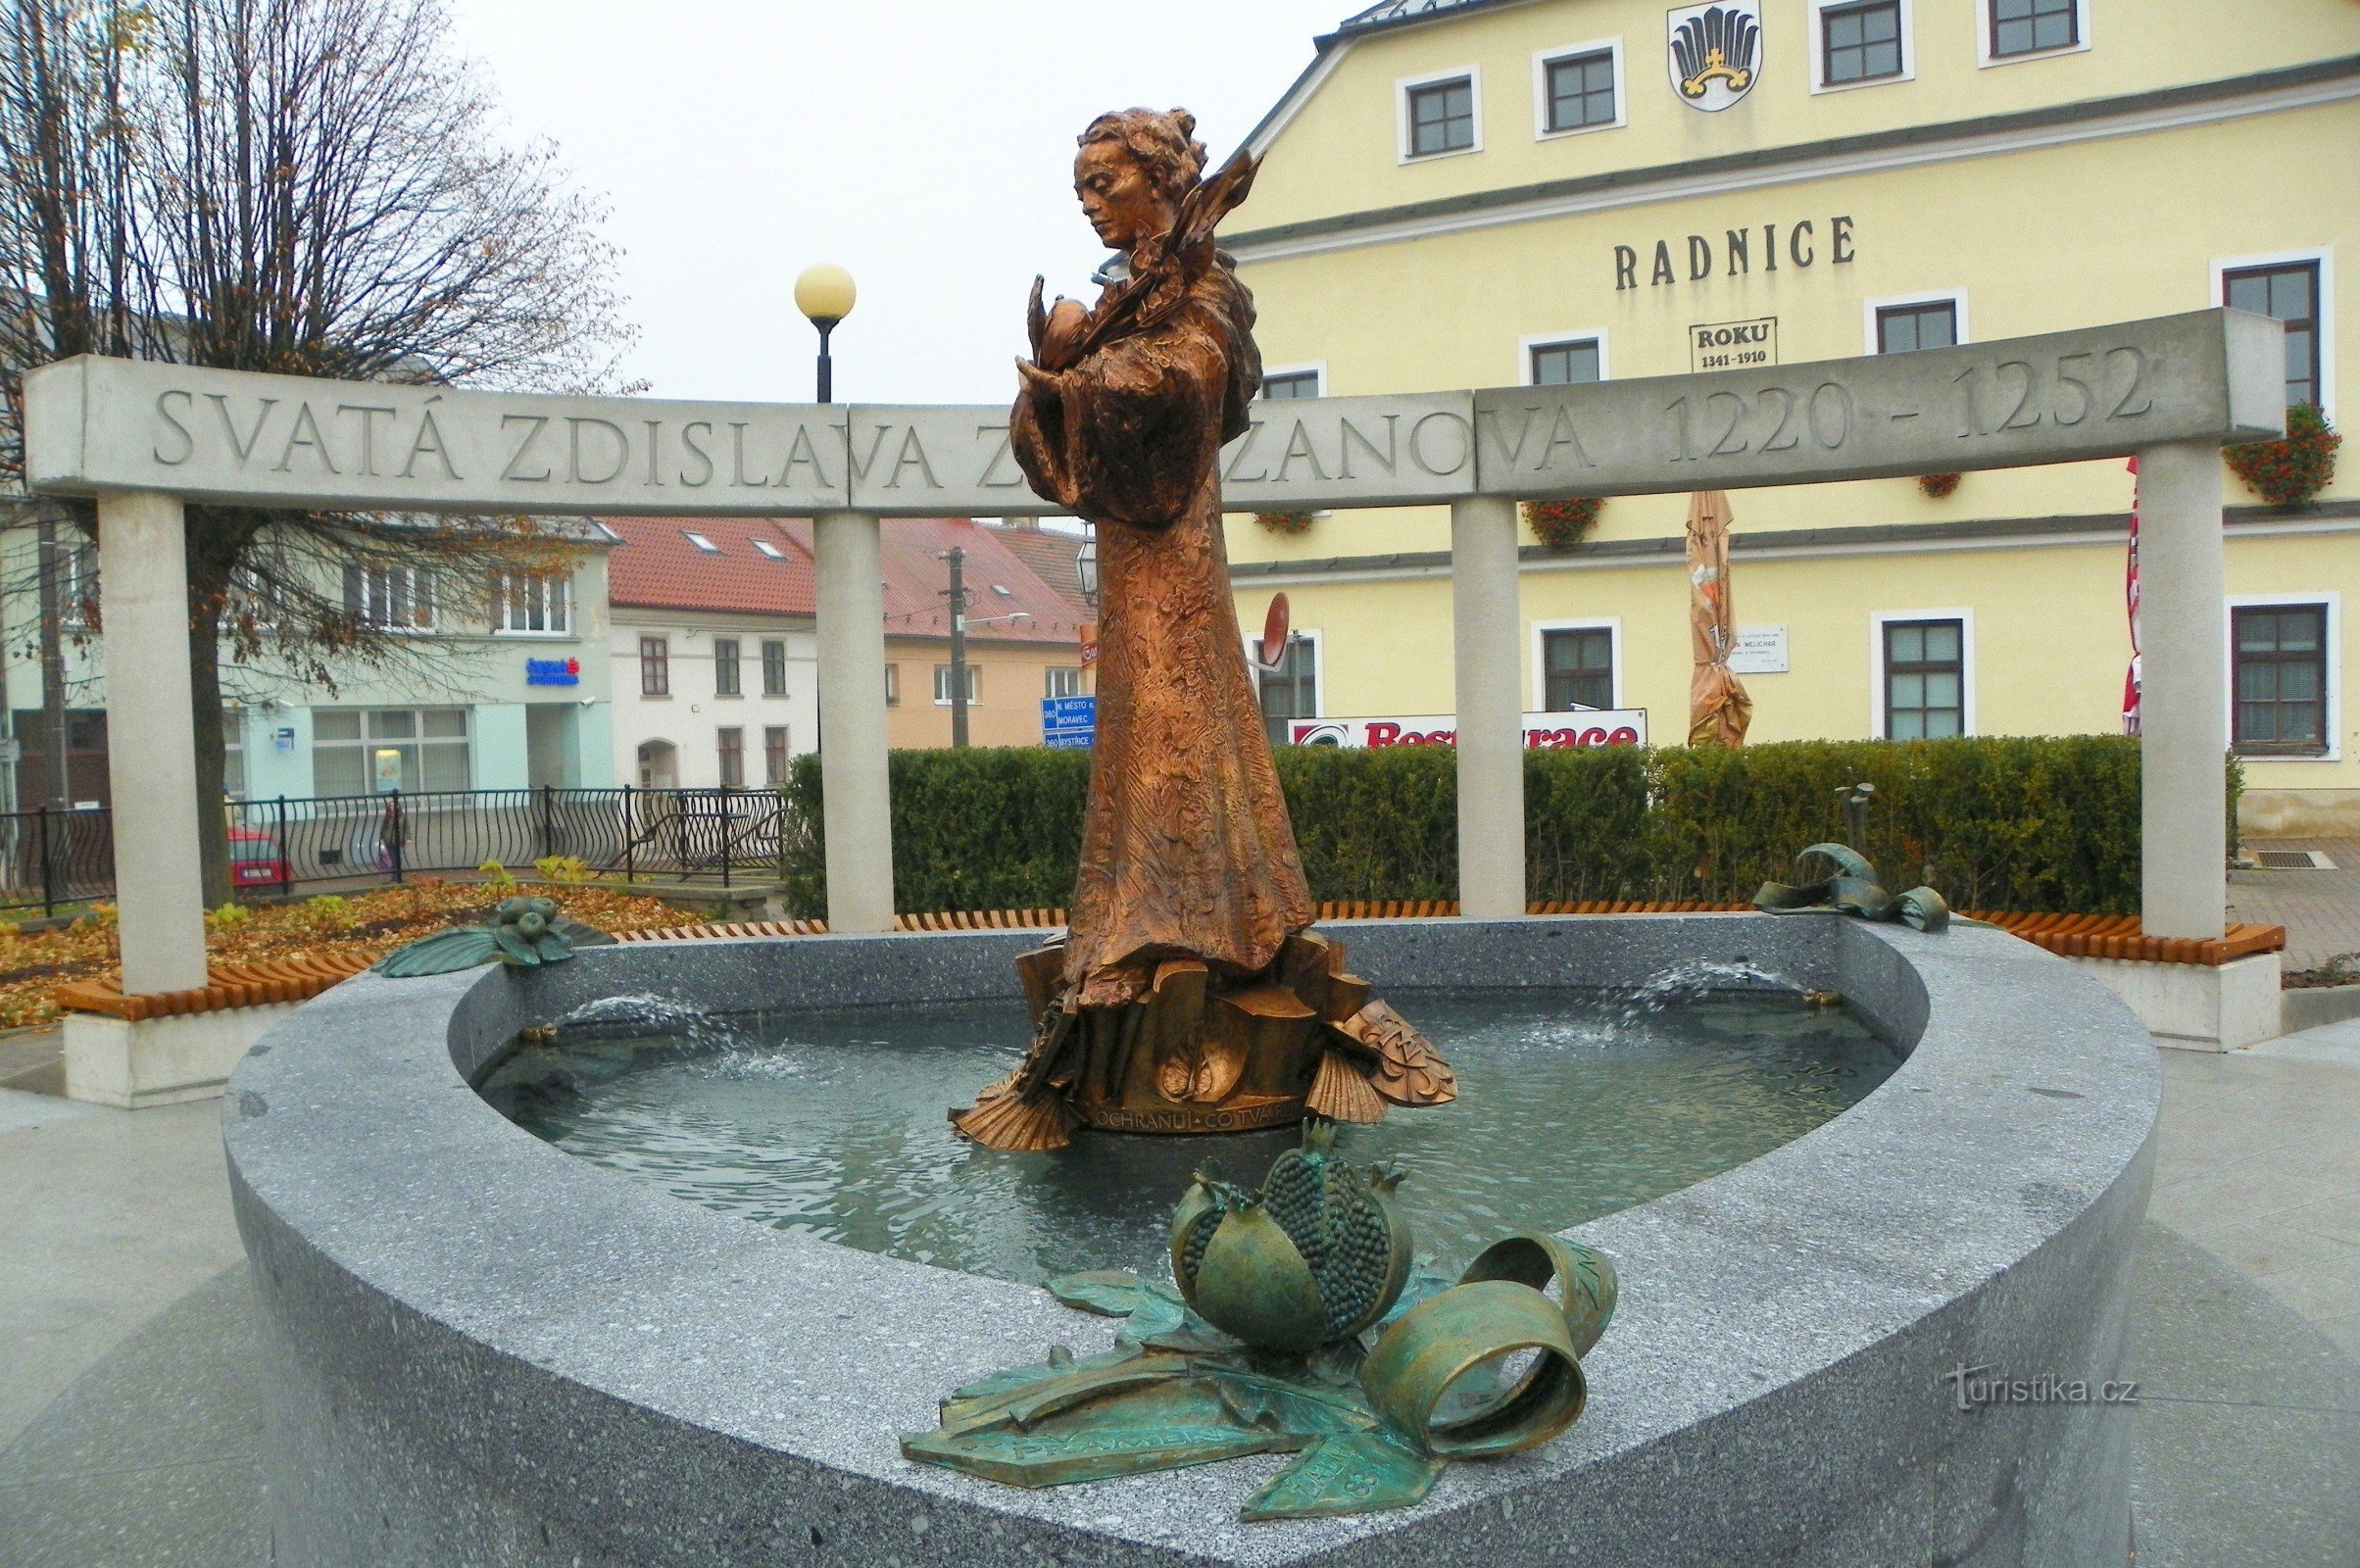 Monument to St. Zdislava in Křižanov